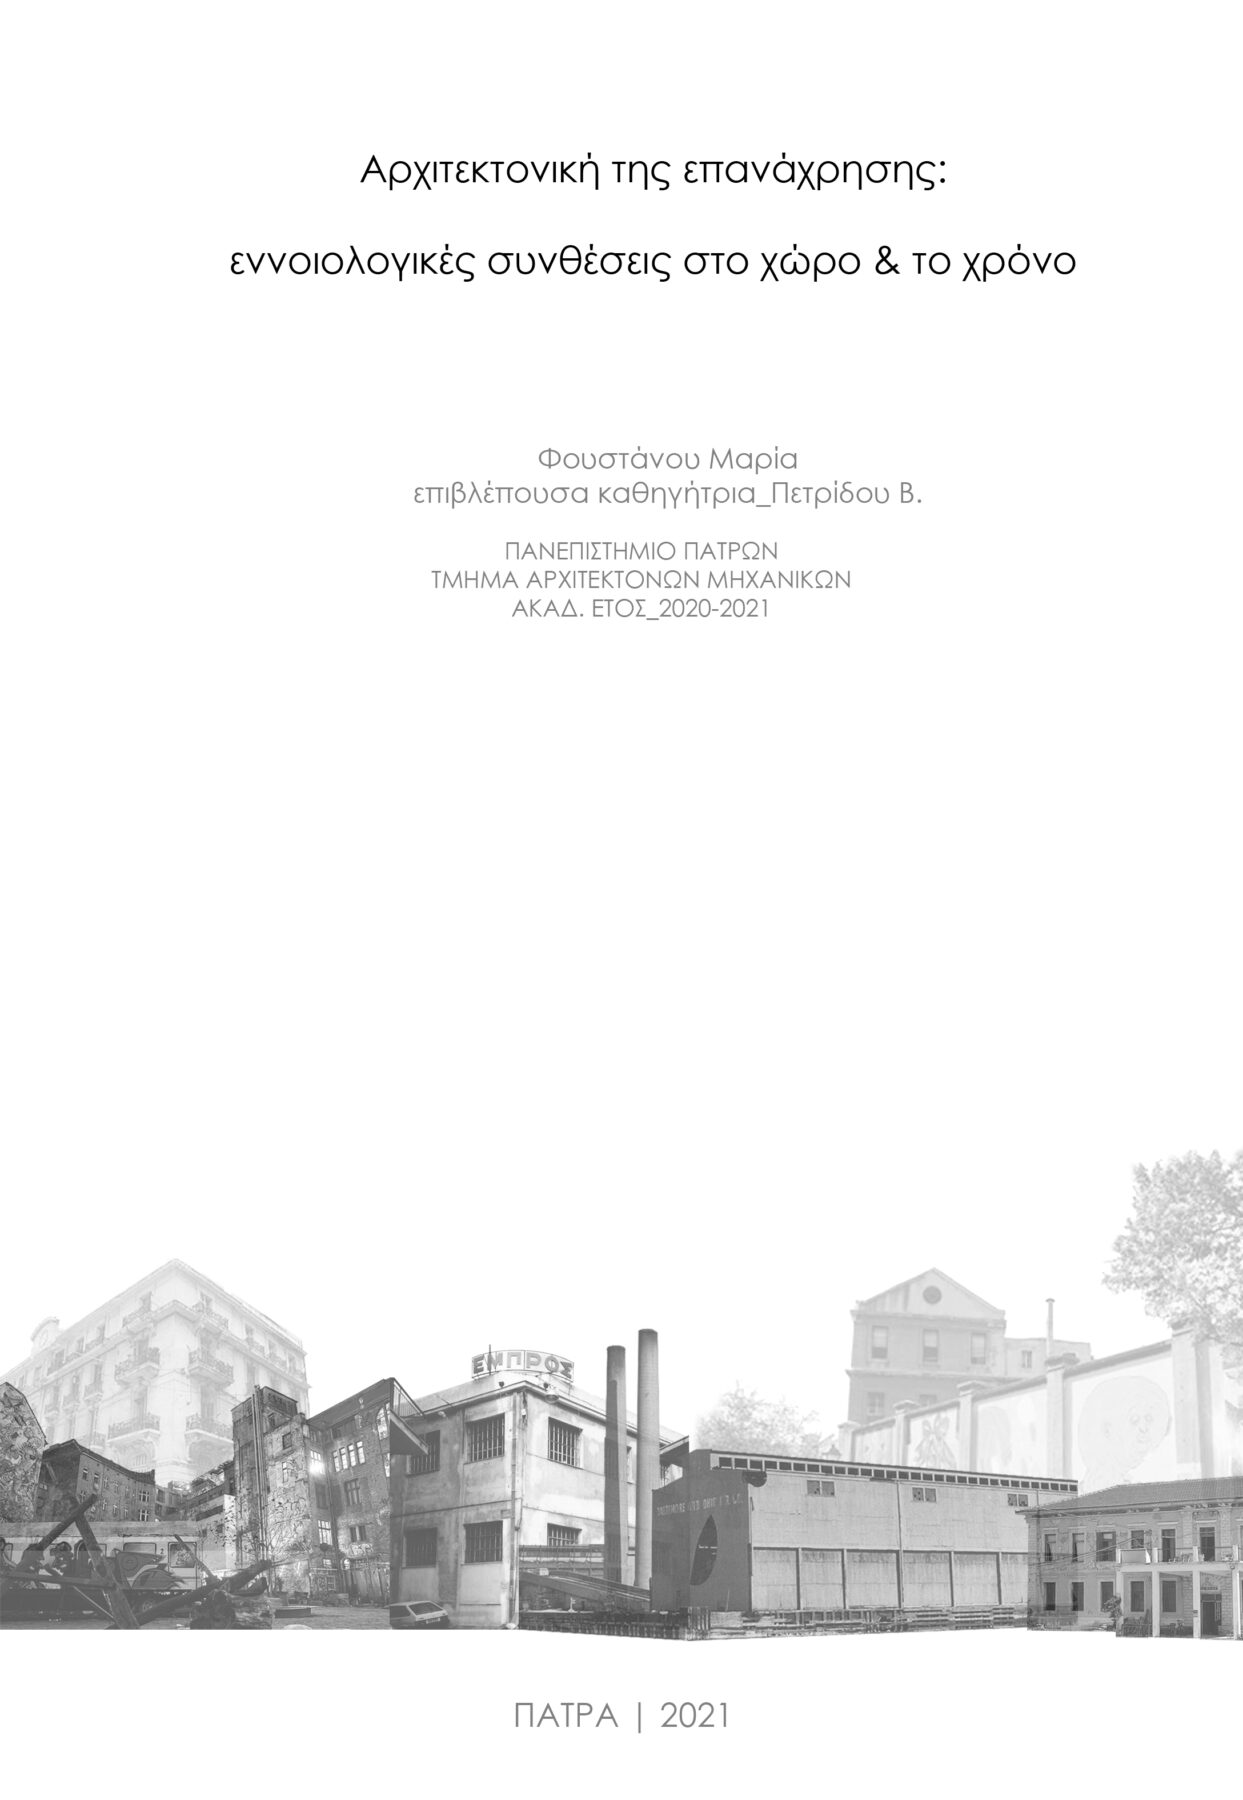 Archisearch Αρχιτεκτονική της επανάχρησης: εννοιολογικές συνθέσεις στο χώρο & το χρόνο | Ερευνητική εργασία από την Μαρία Φουστάνου